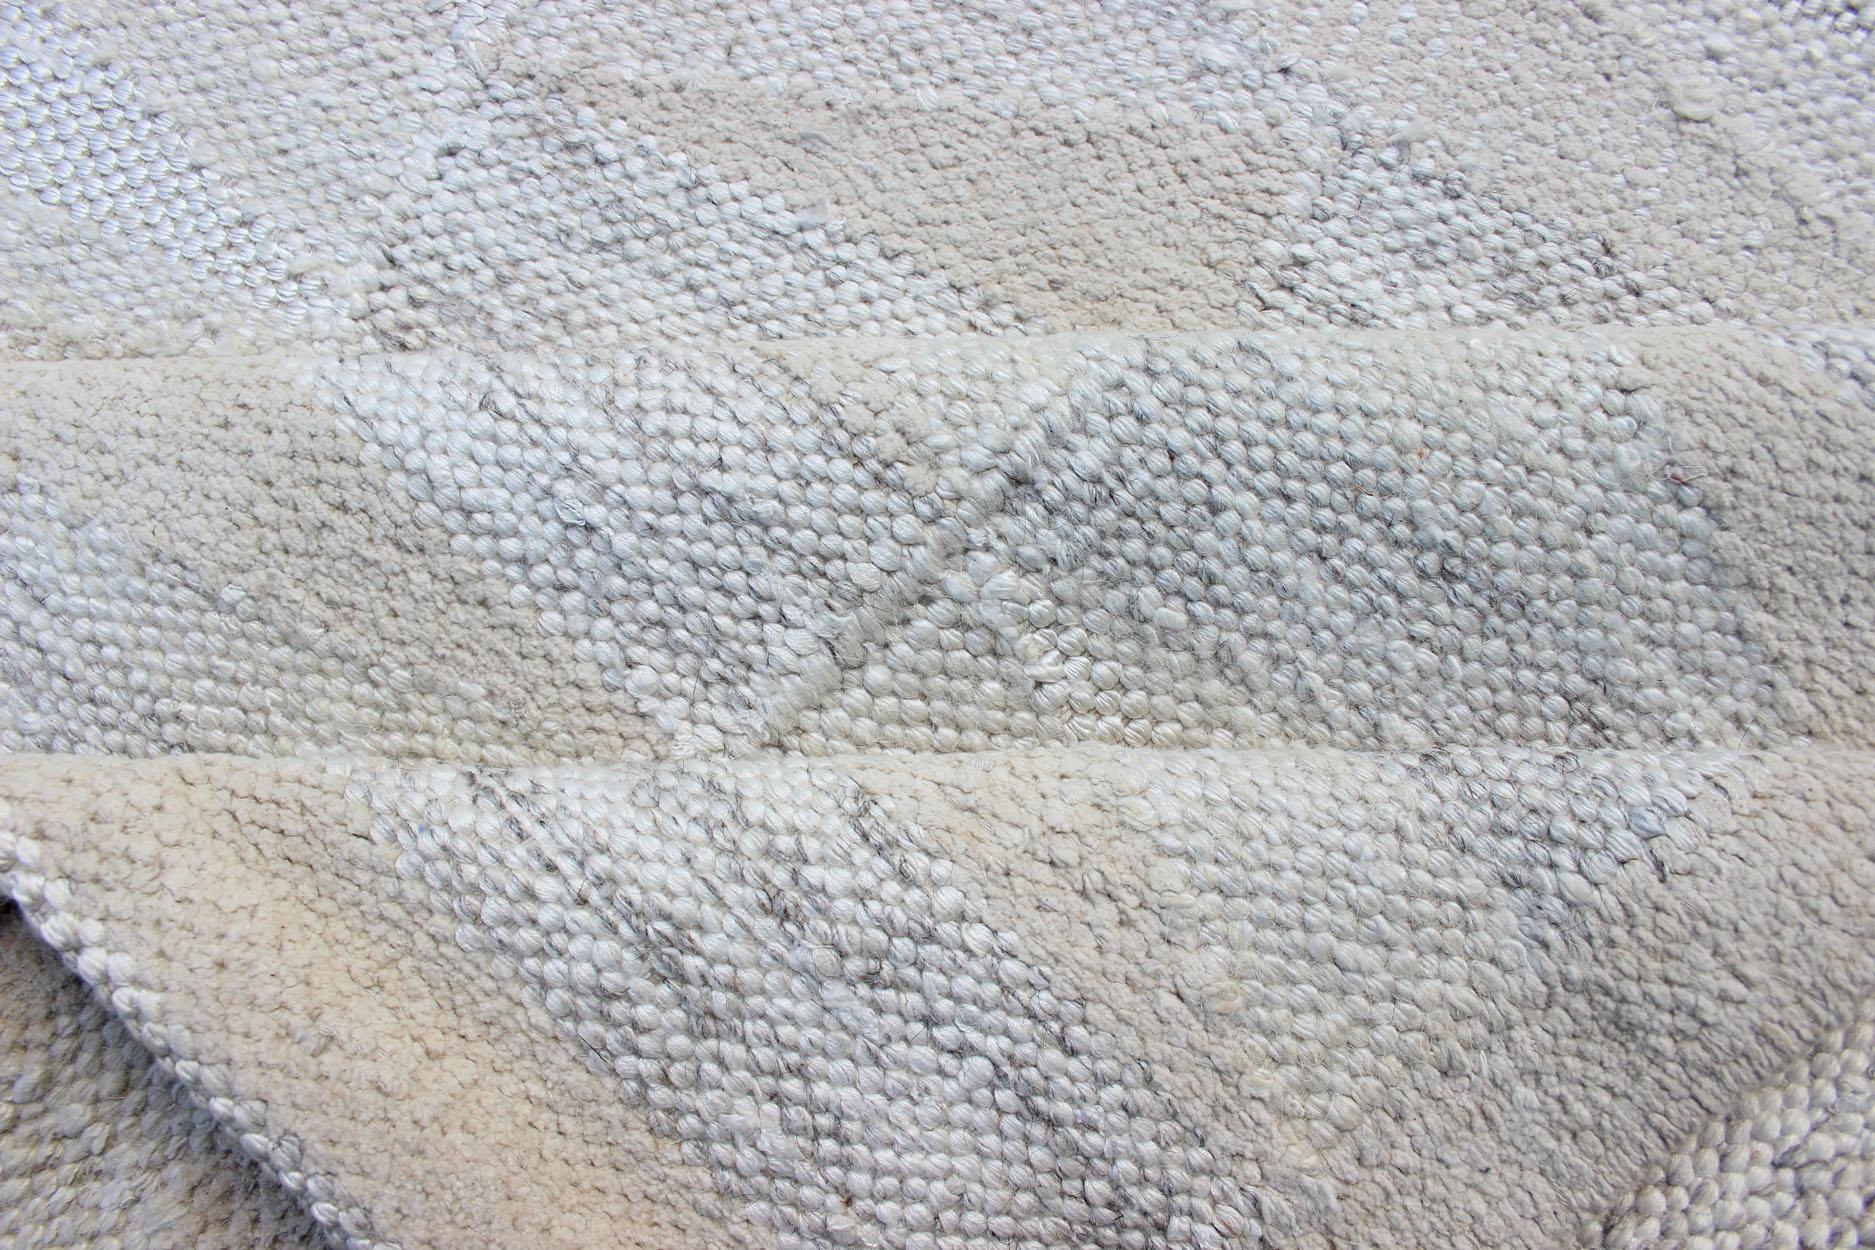 Modern Design Scandinavian Flat-Weave Rug in Gray, Tan, Taupe and Cream 2